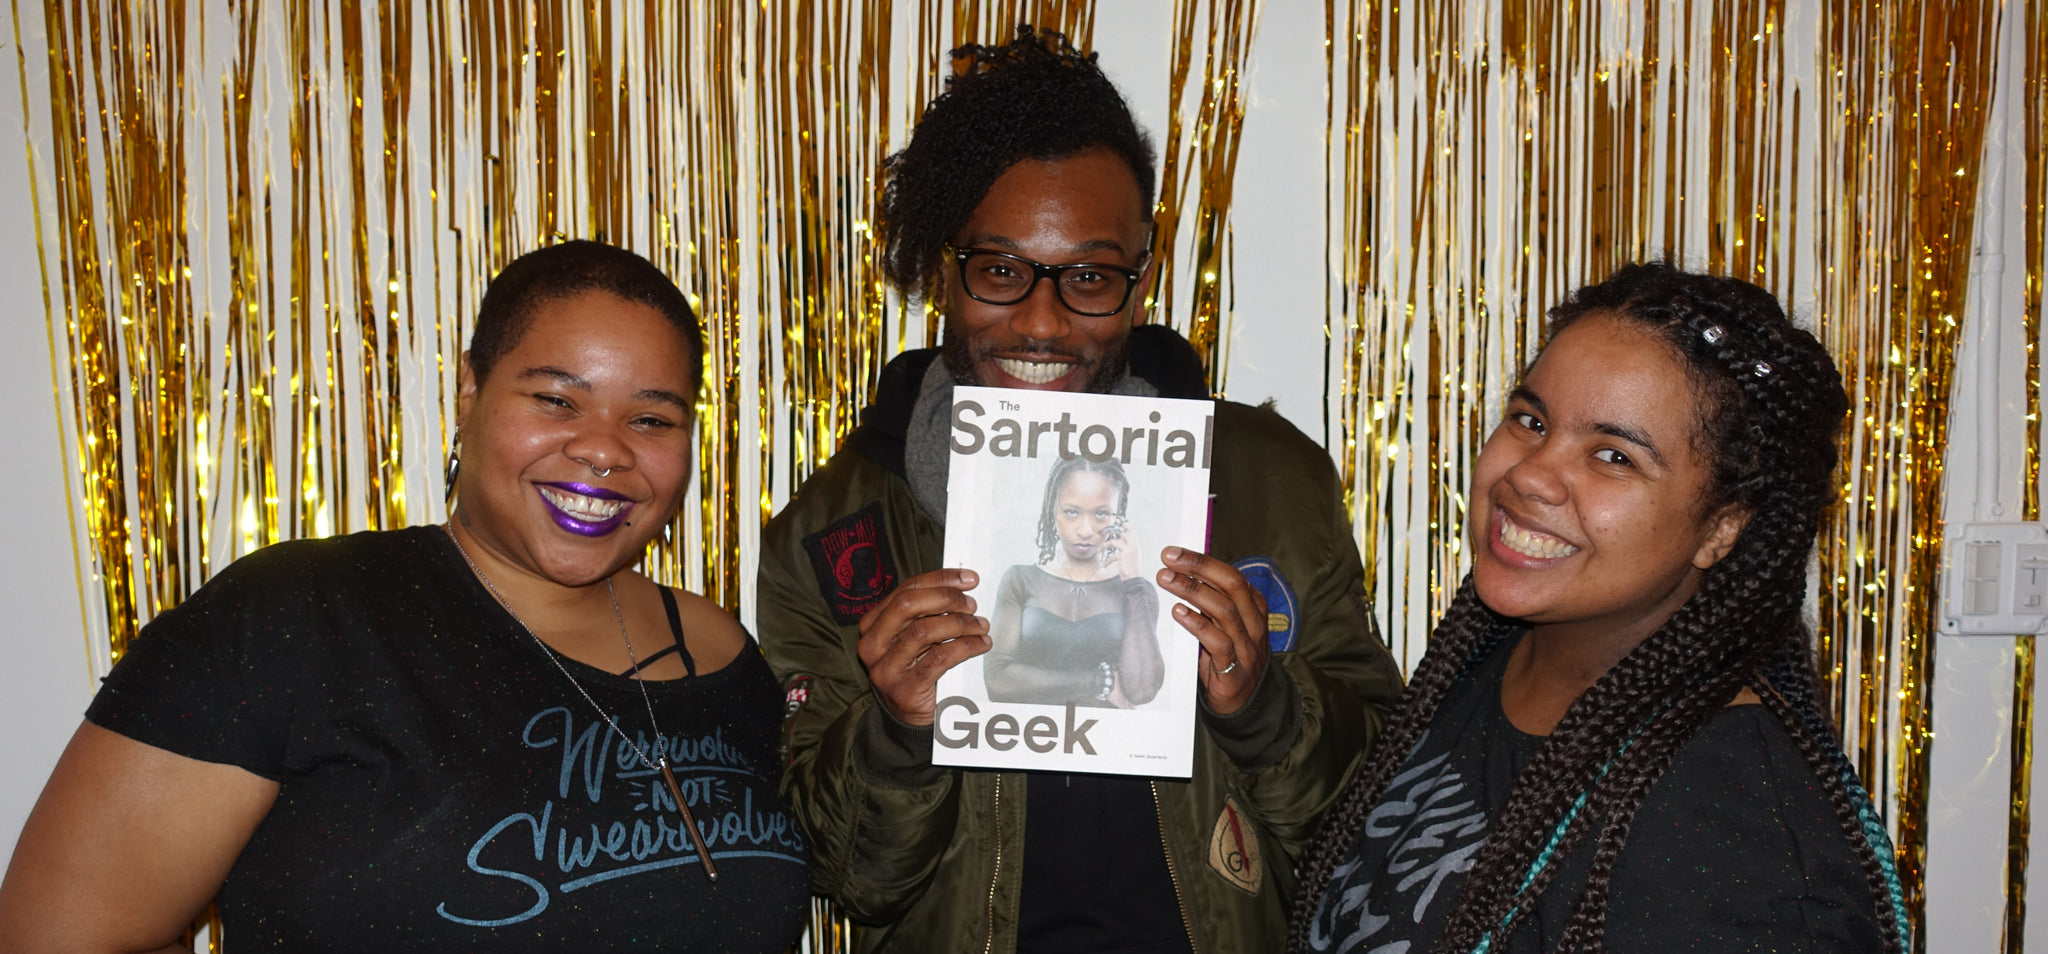 Event Recap: The Sartorial Geek Launch Party